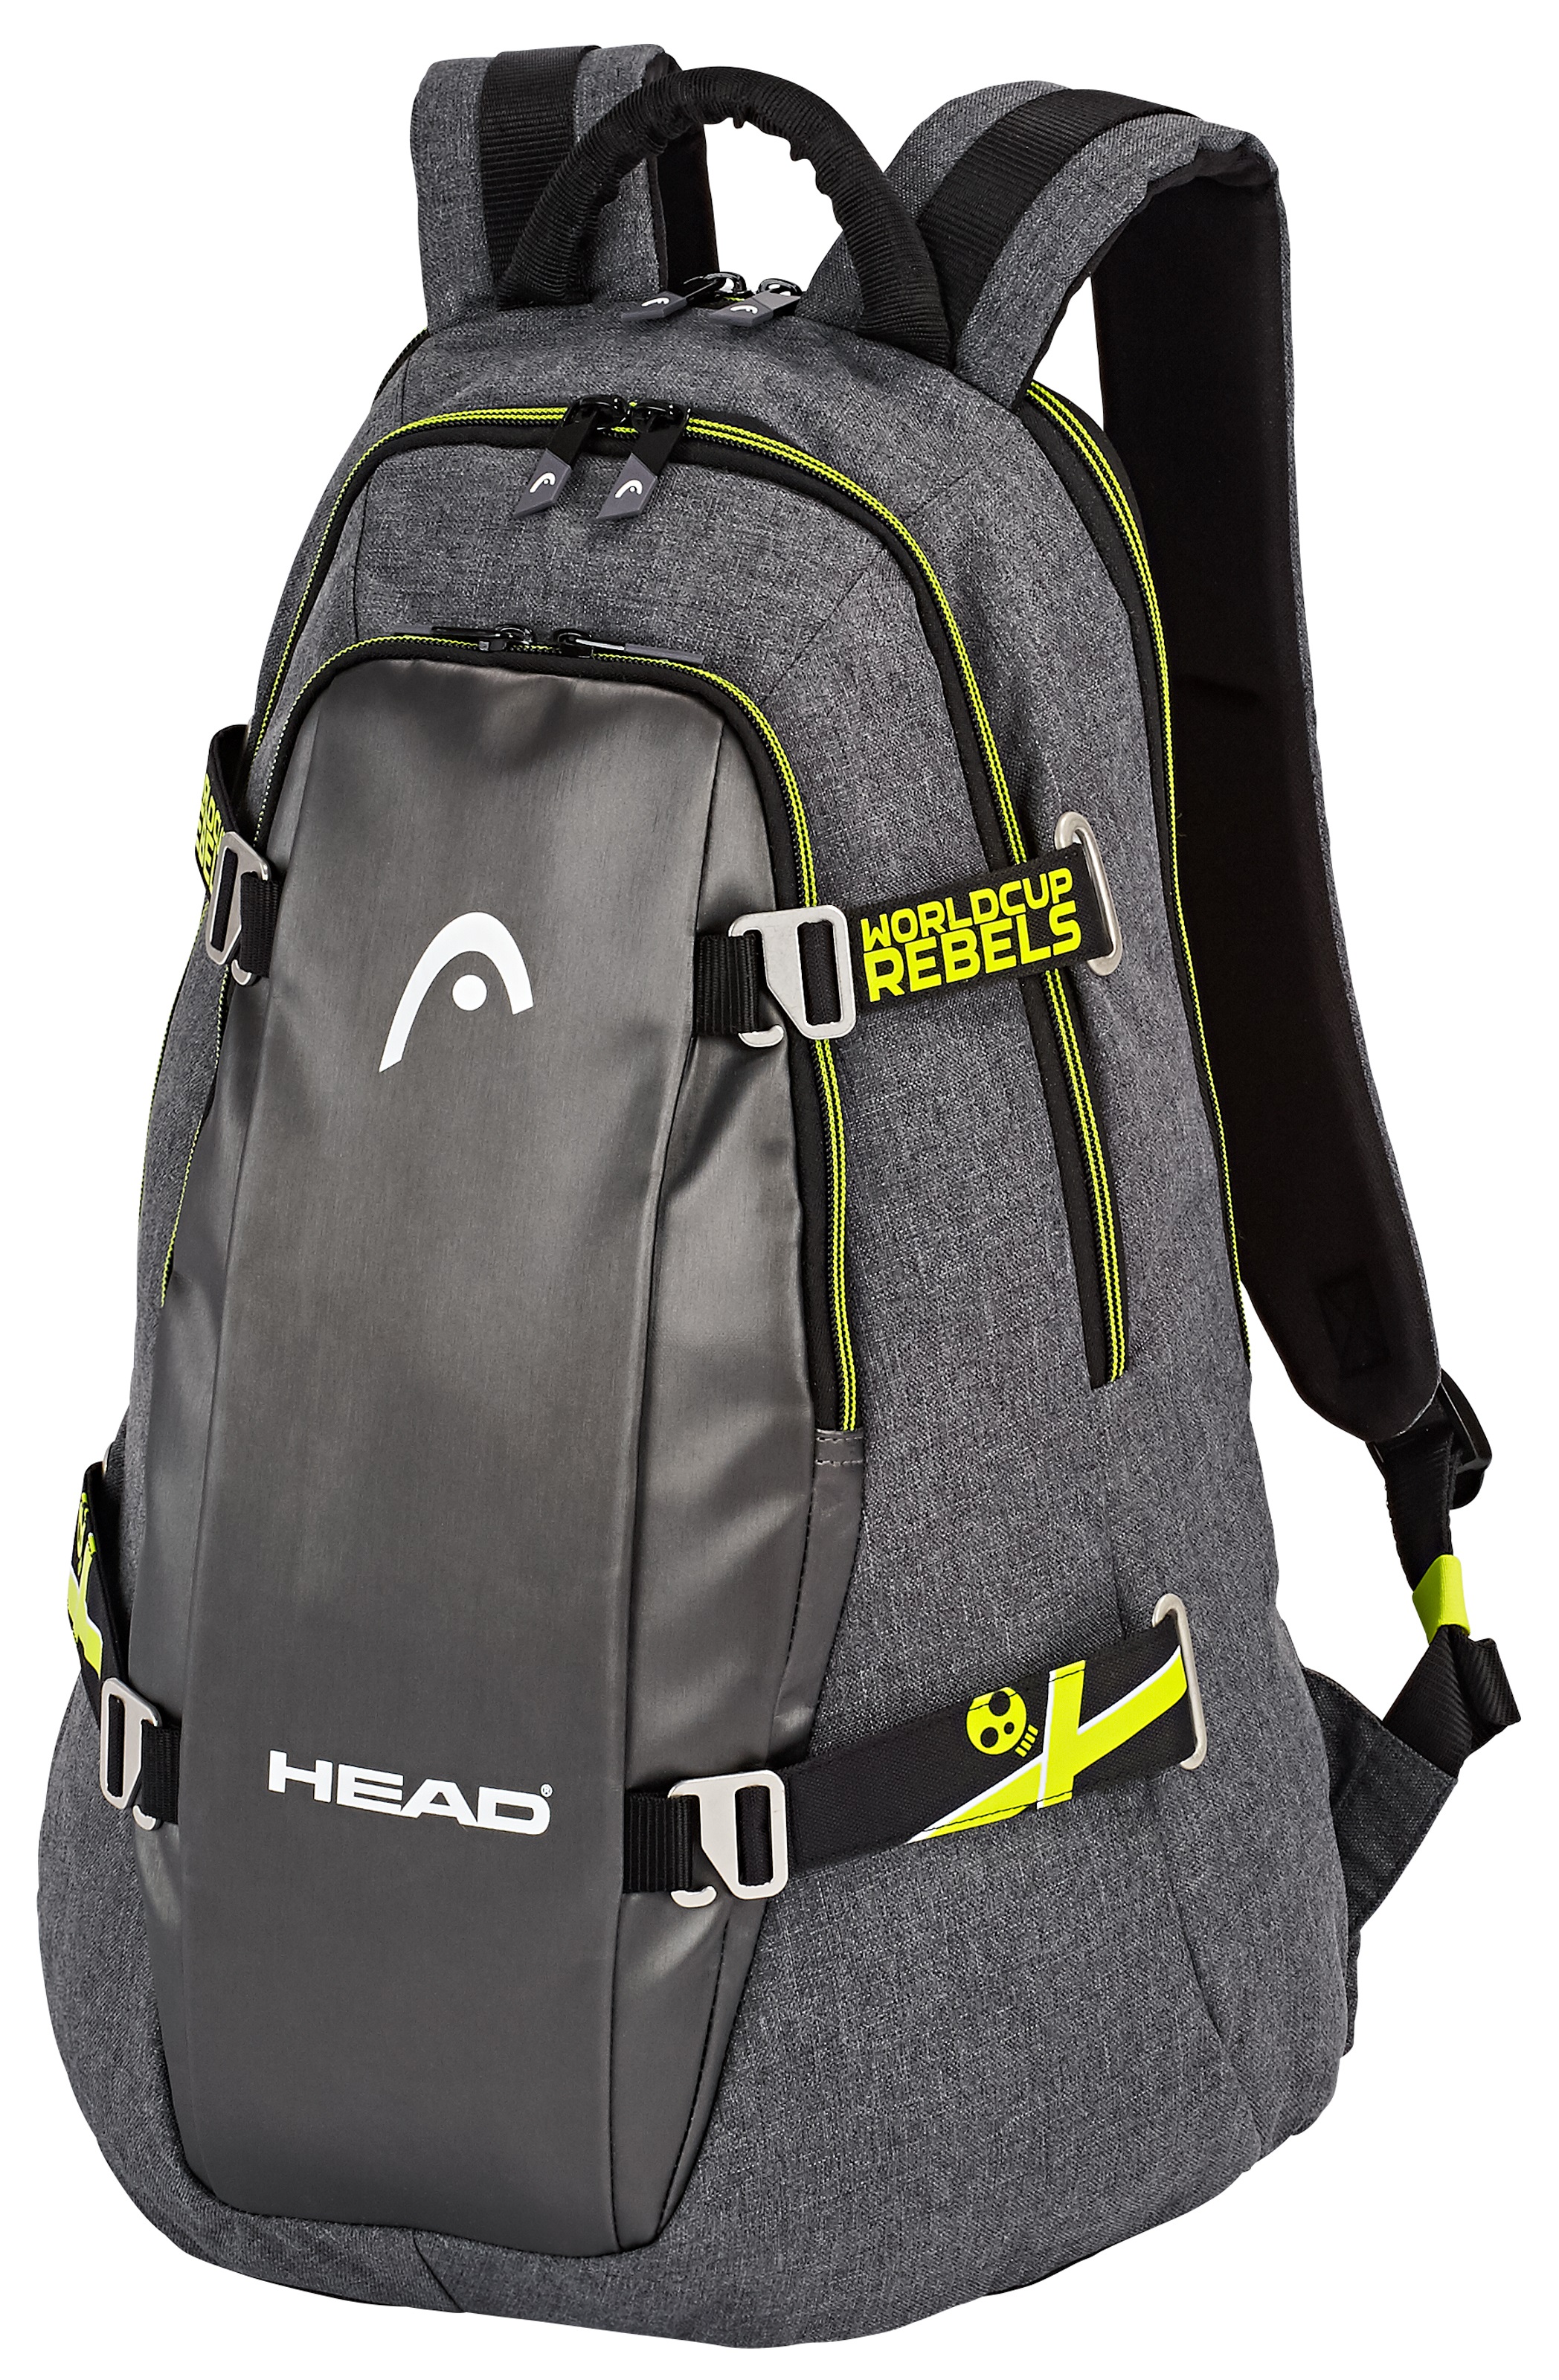 HEAD Rebels Backpack Skirucksack Collection 2019